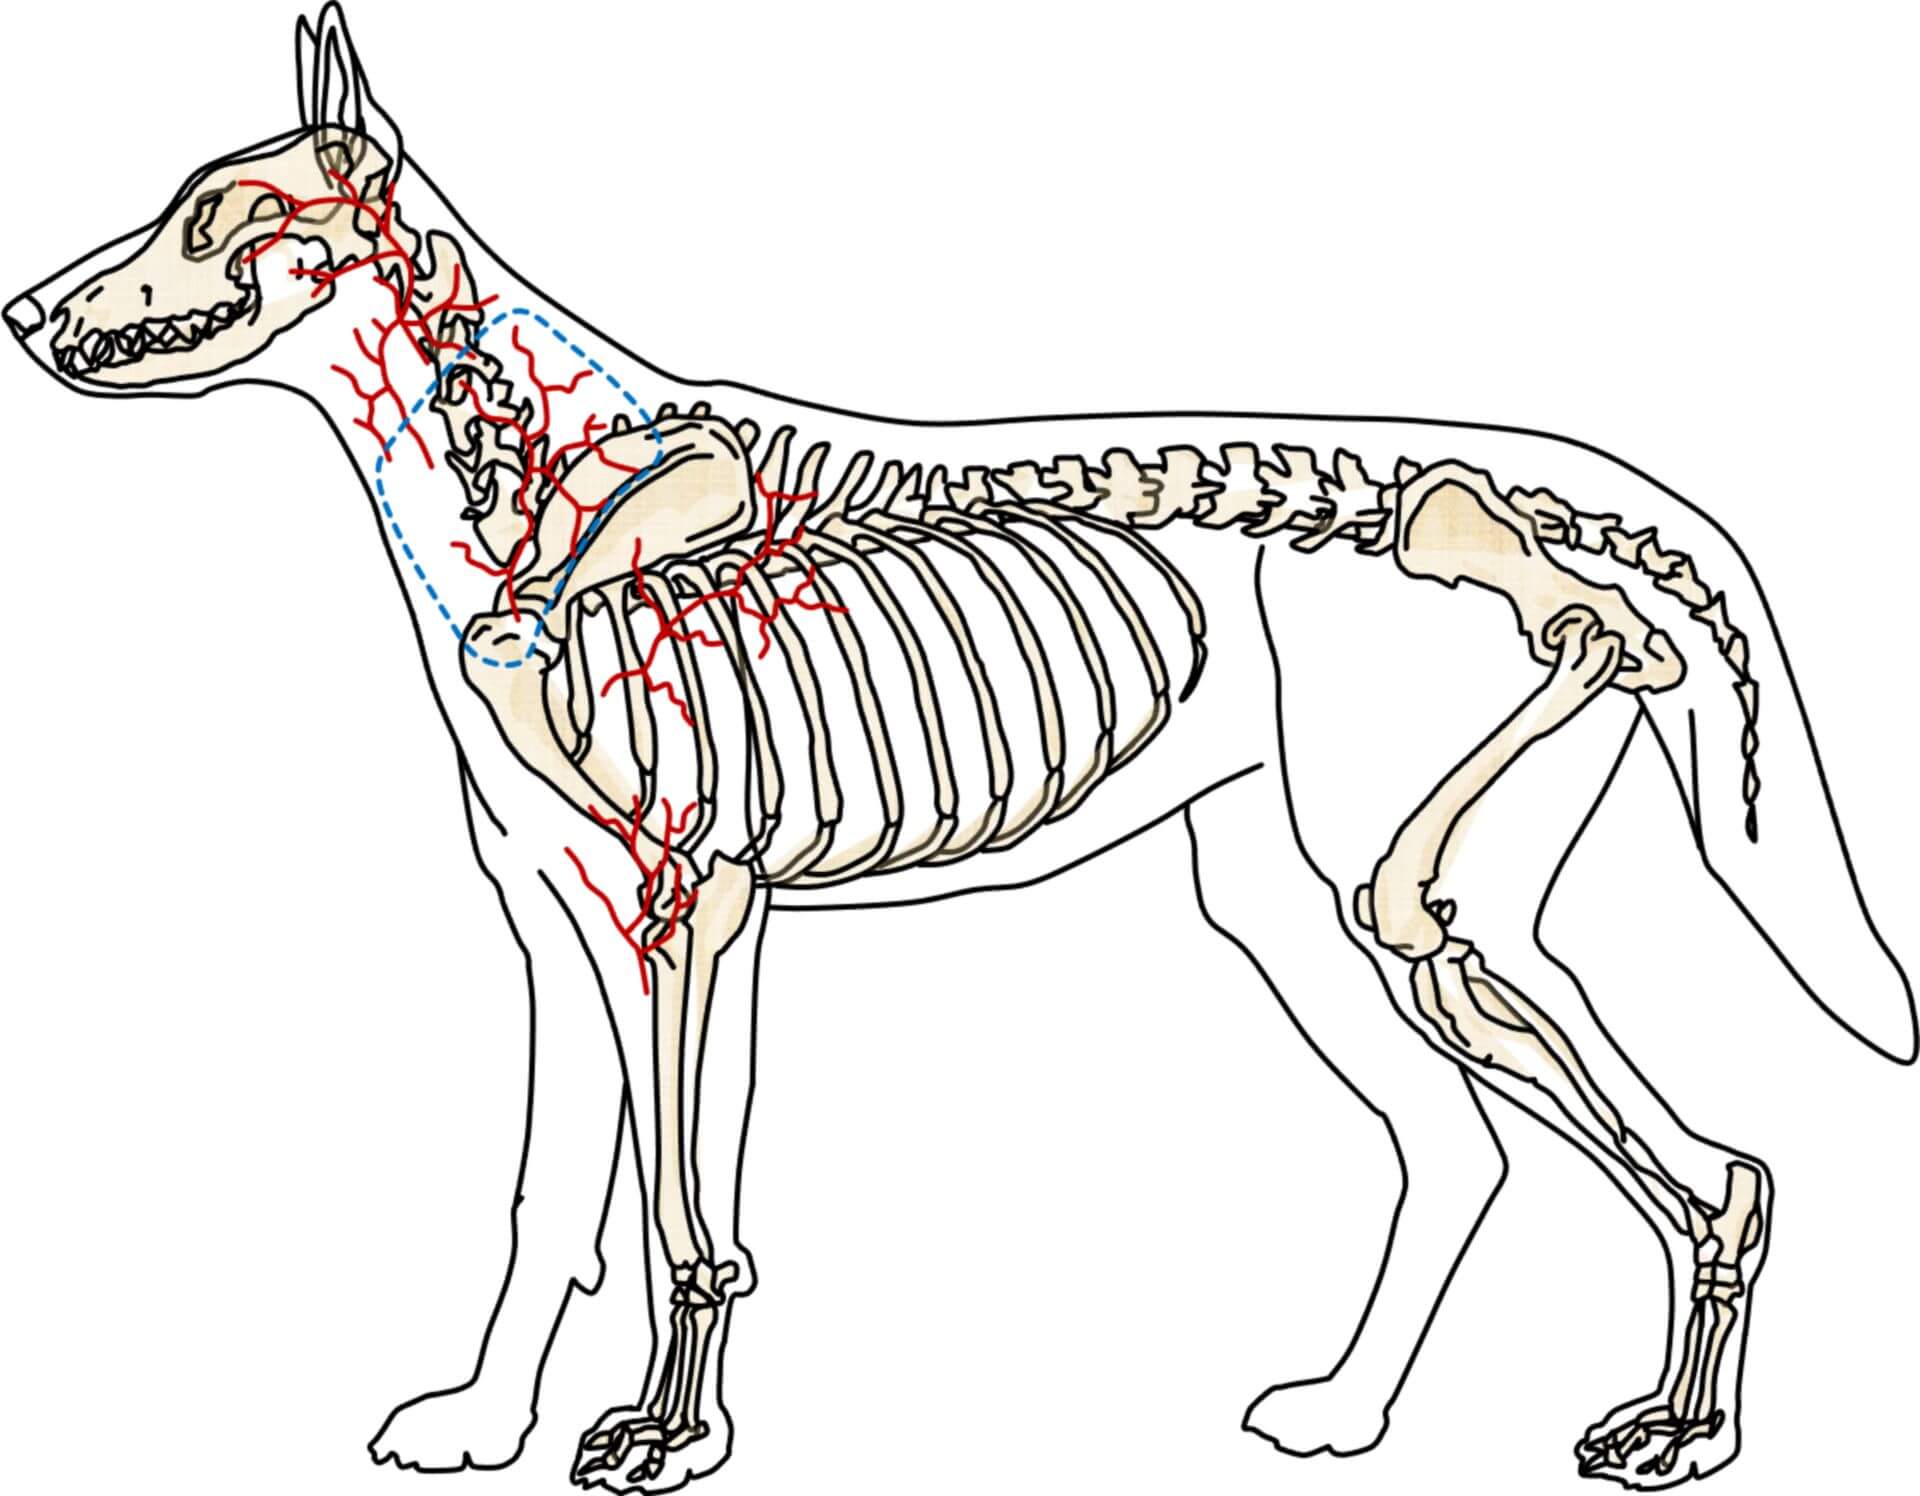 Arterienlappen der Arteria cervicalis superficialis (Hund)